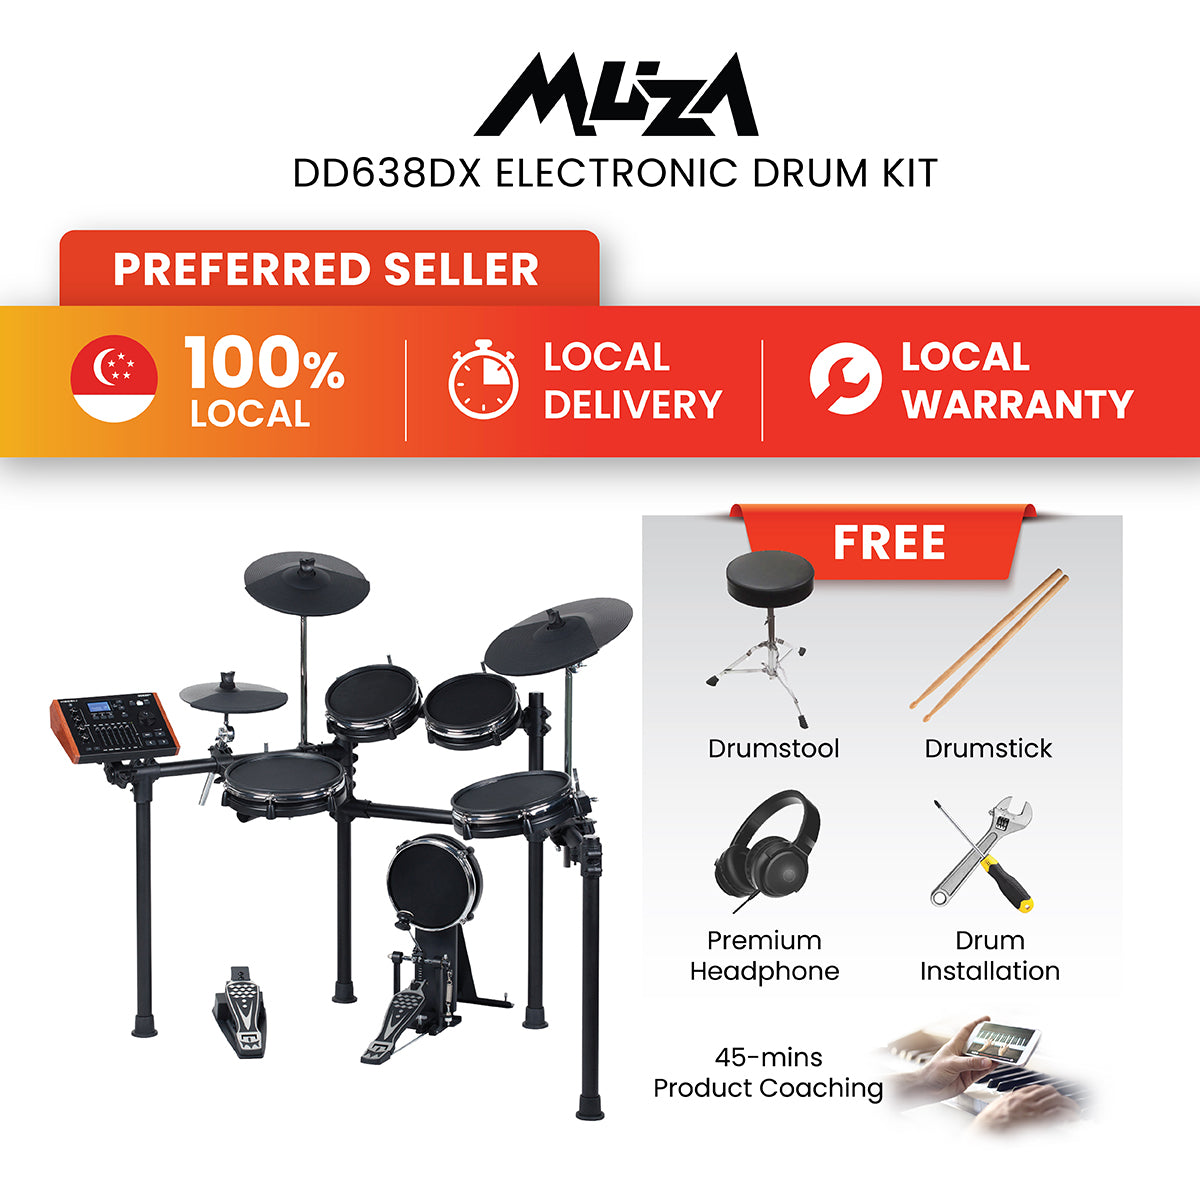 MUZA DD638DX Electronic Drum Kit